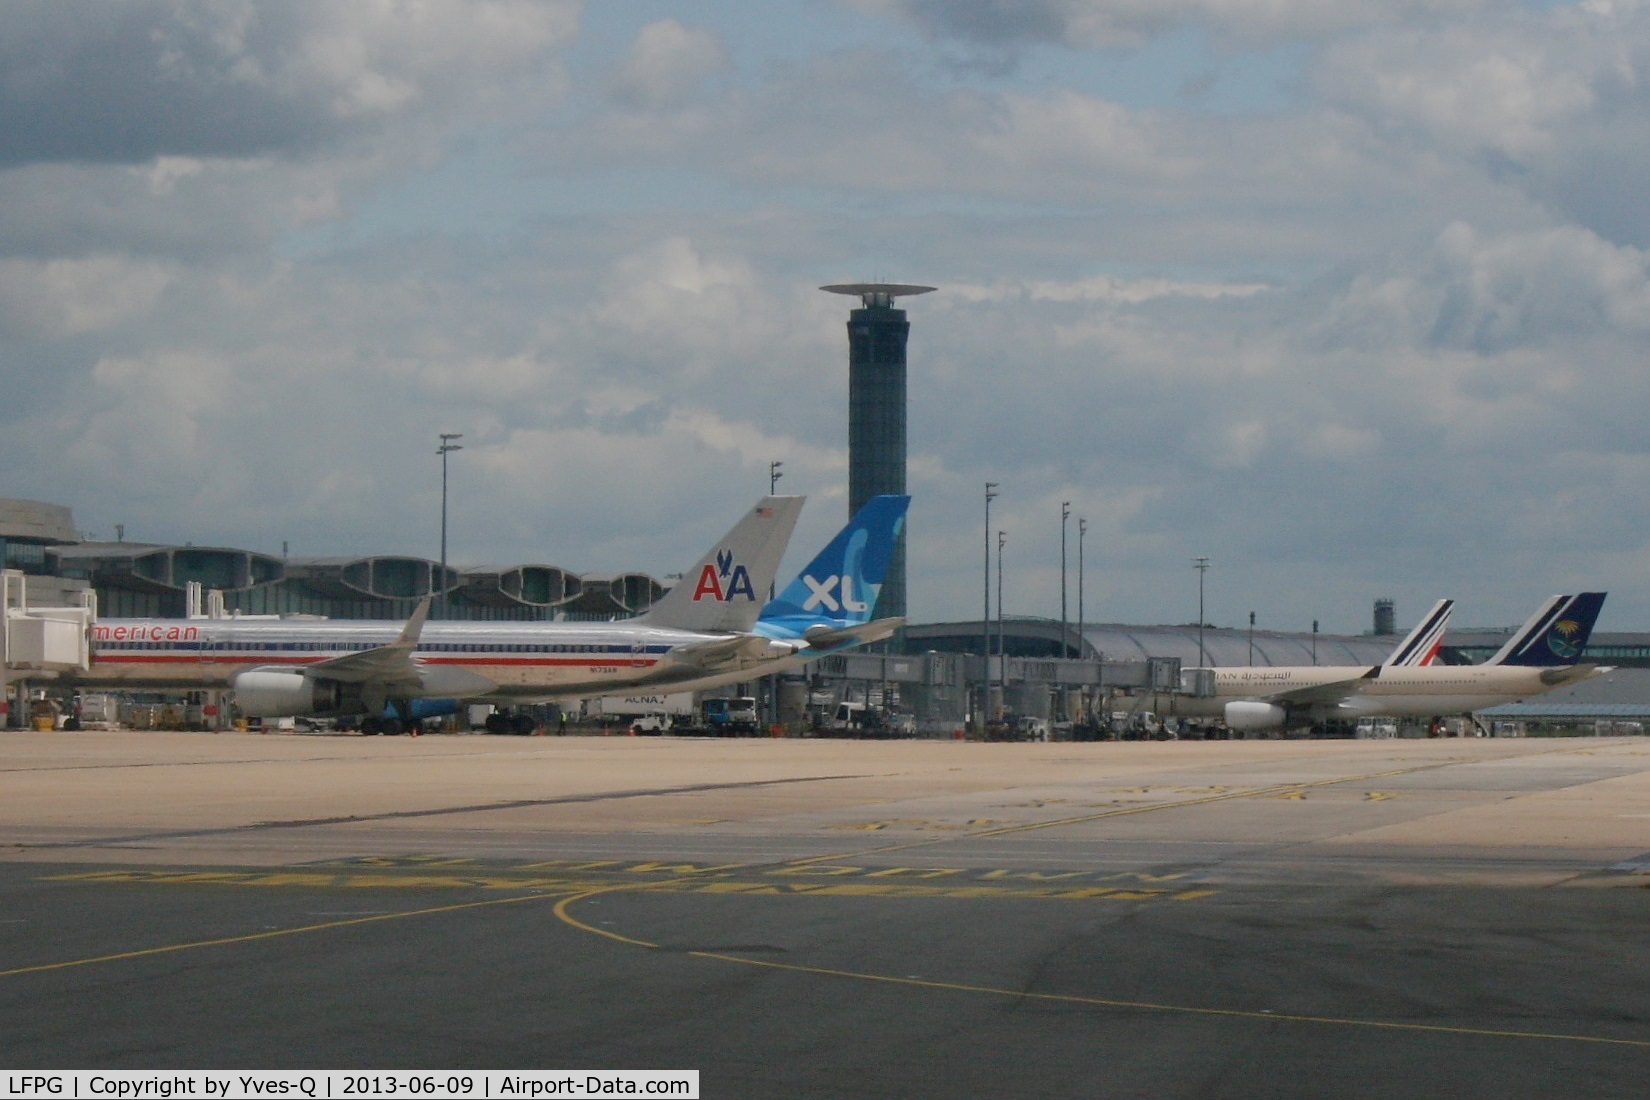 Paris Charles de Gaulle Airport (Roissy Airport), Paris France (LFPG) - 2D and 2B Terminals, Roissy Charles De Gaulle Airport (LFPG-CDG)